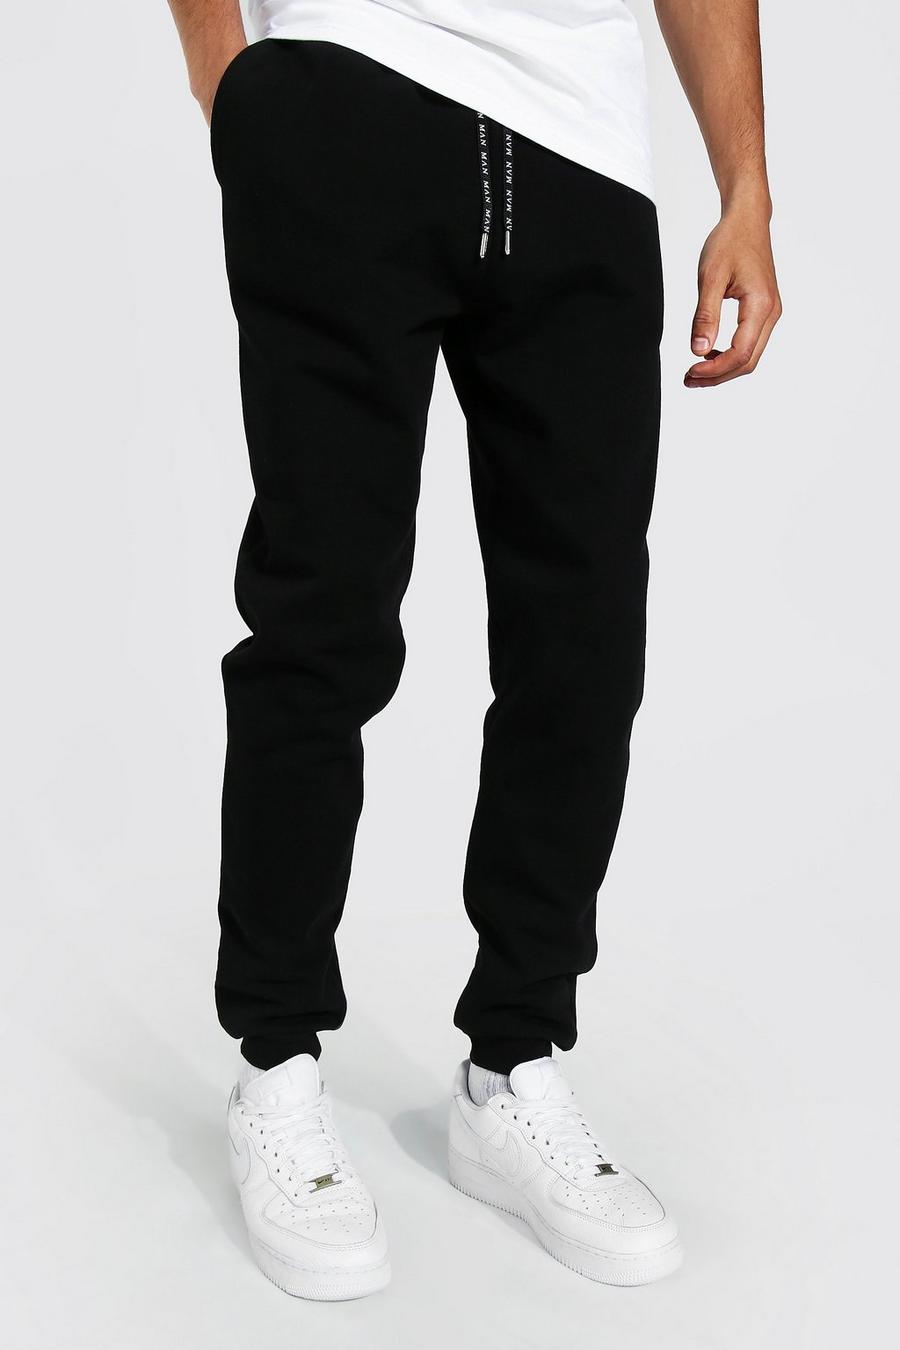 Pantaloni tuta Tall Skinny Fit con fermacorde con logo Man, Black nero image number 1